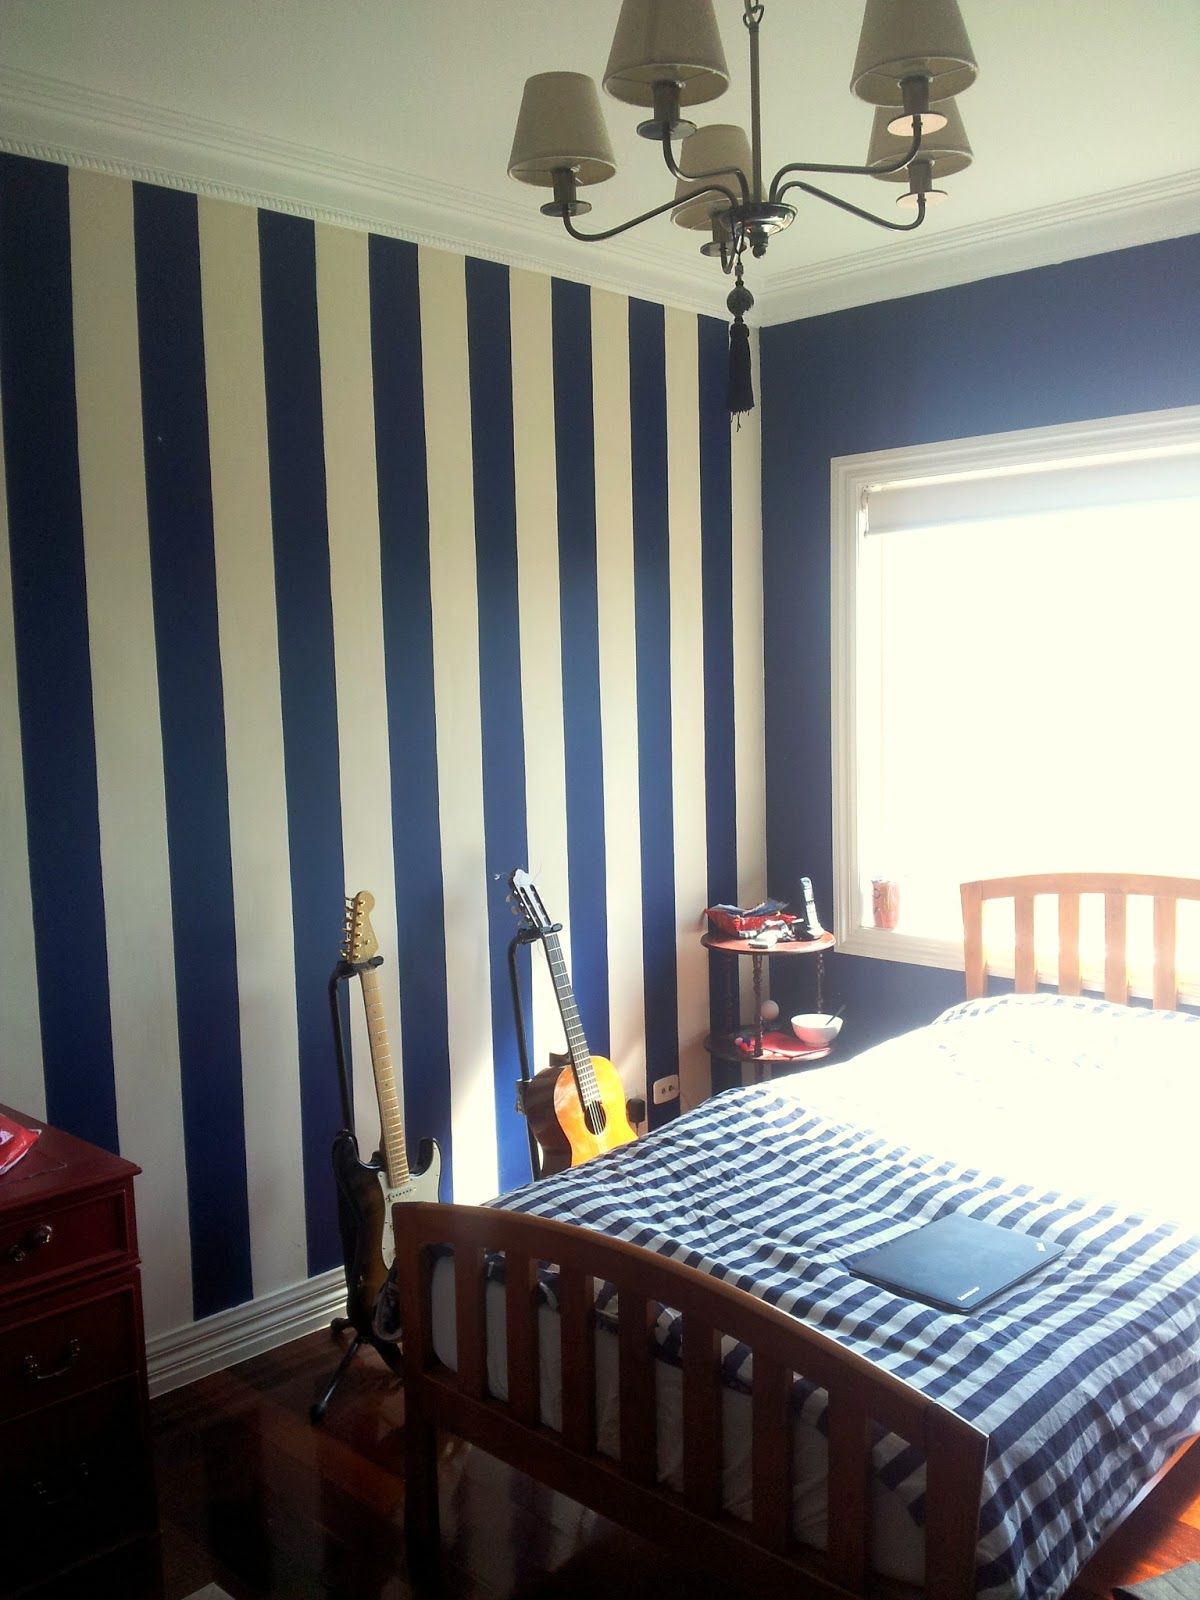 navy wallpaper for walls,room,bedroom,furniture,bed,bed sheet